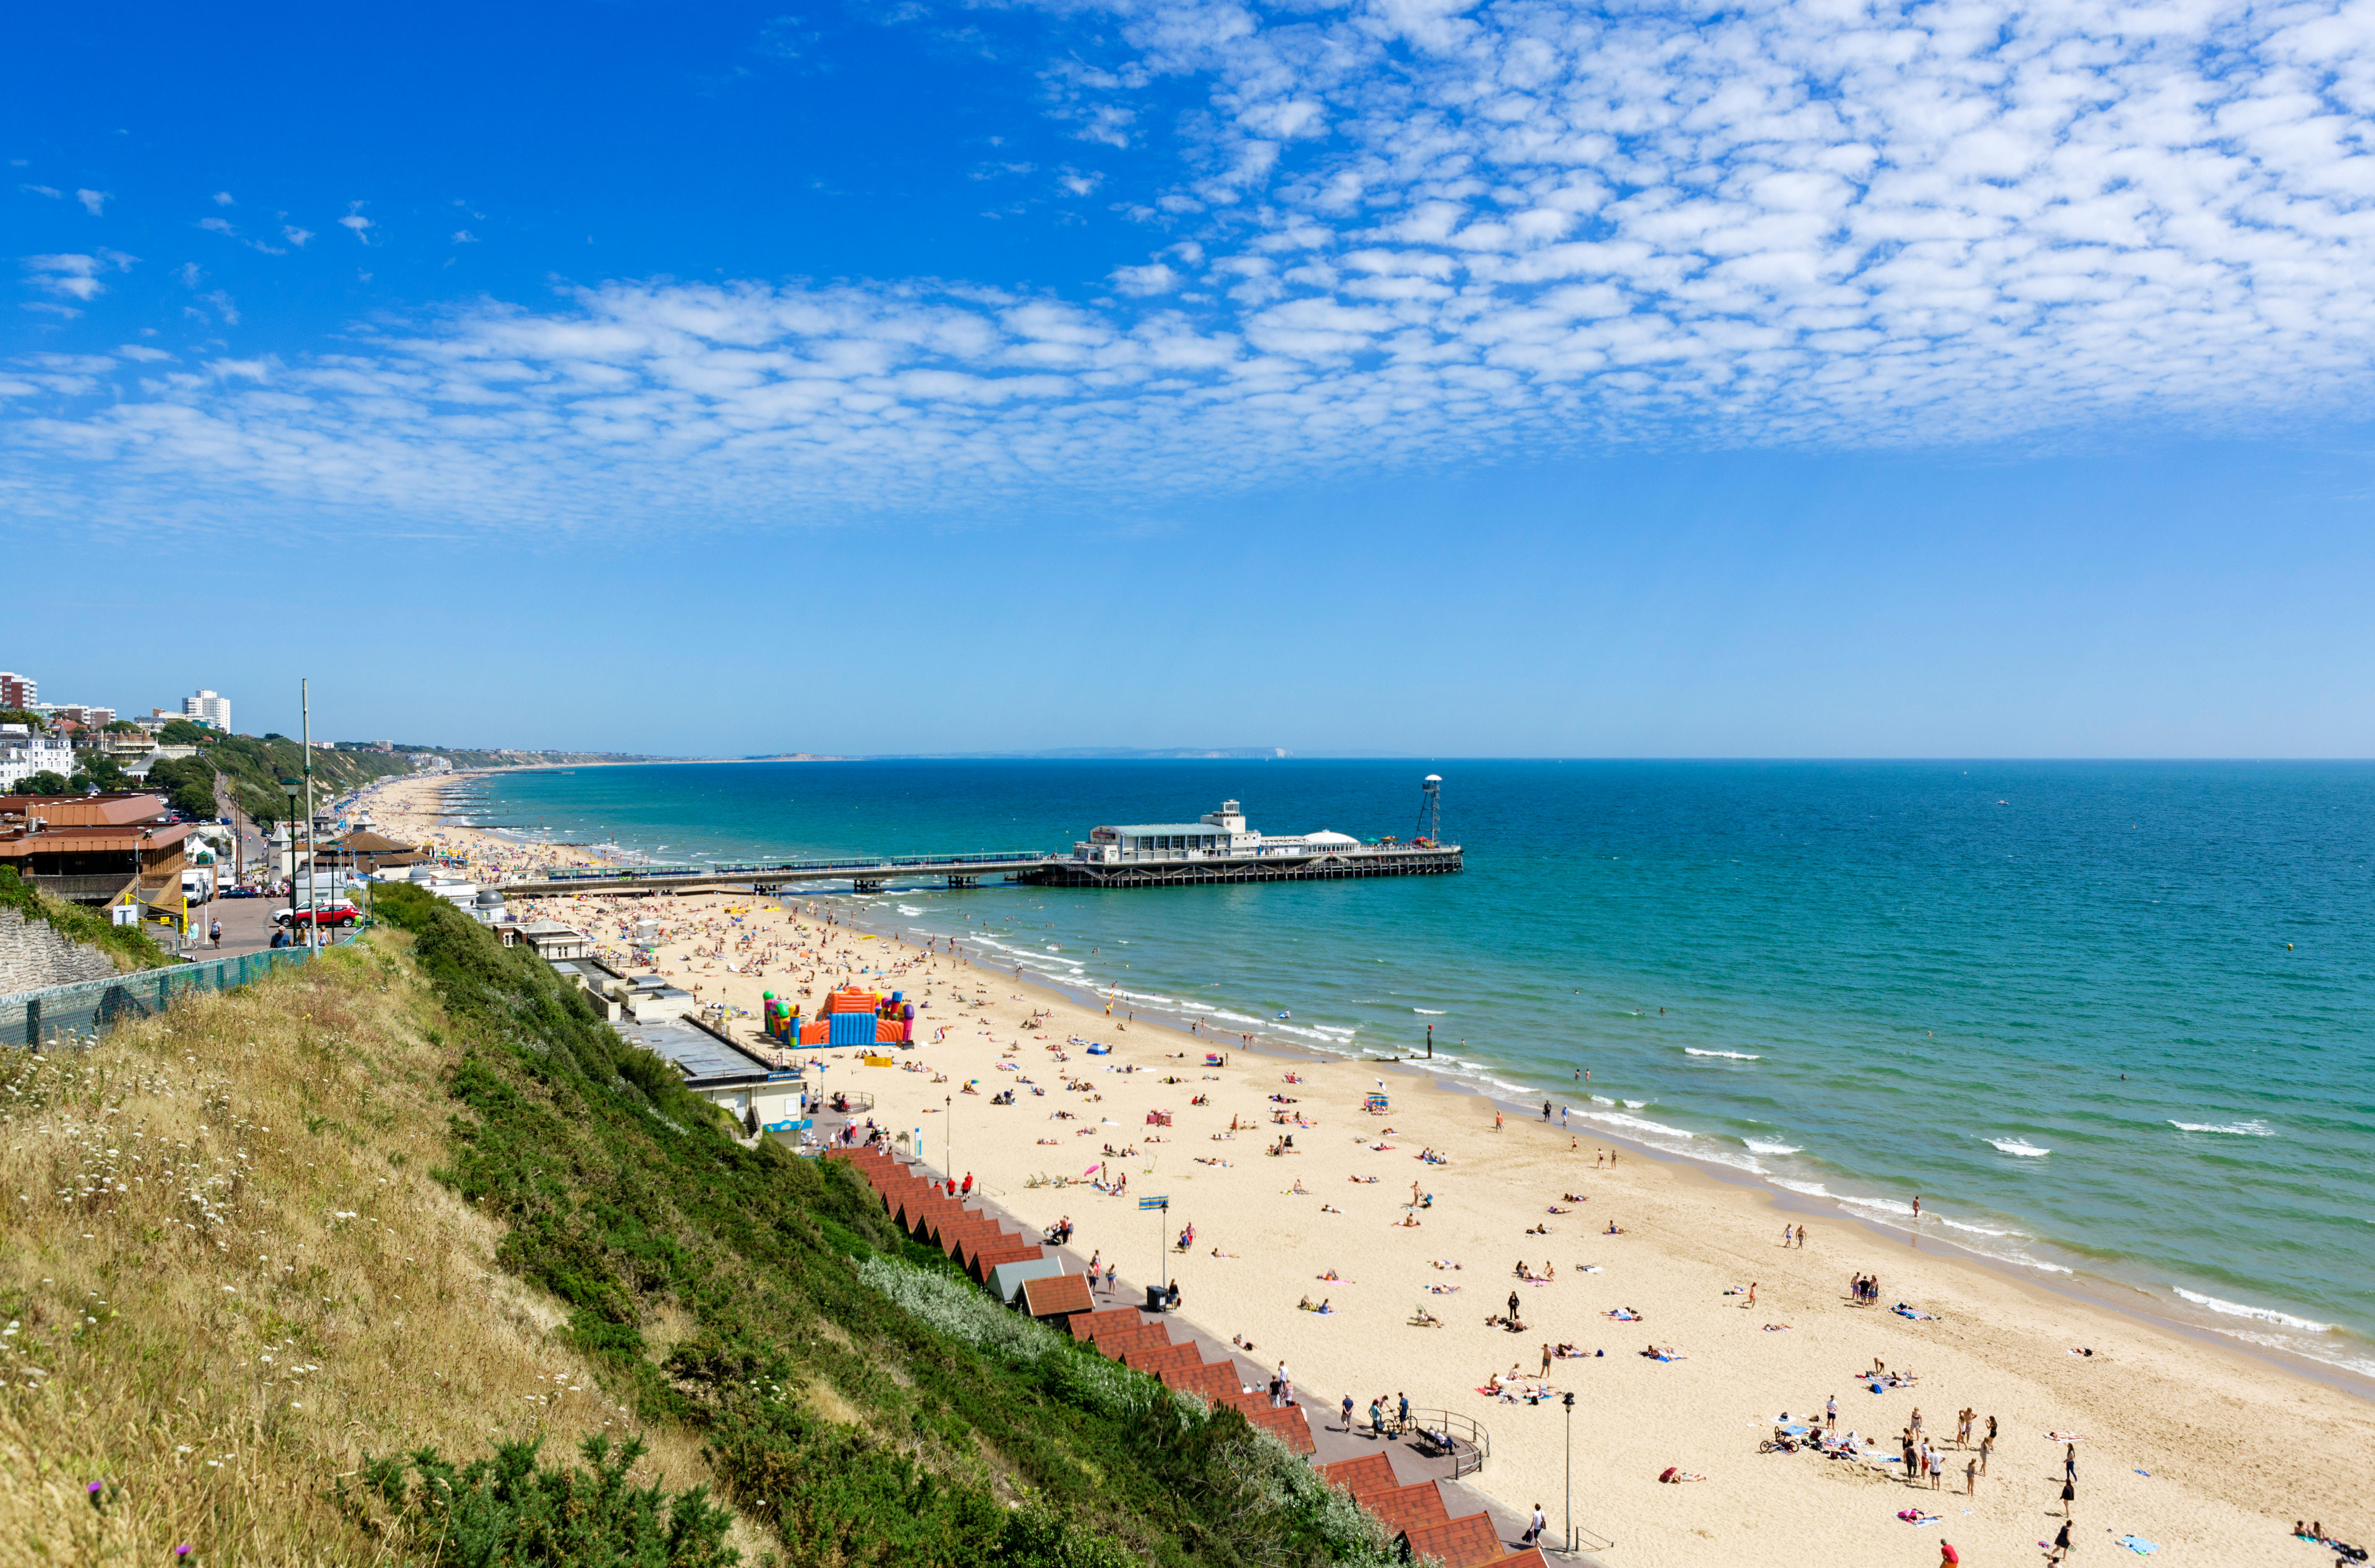 TripAdvisor named Bournemouth Beach as one of the best in Europe